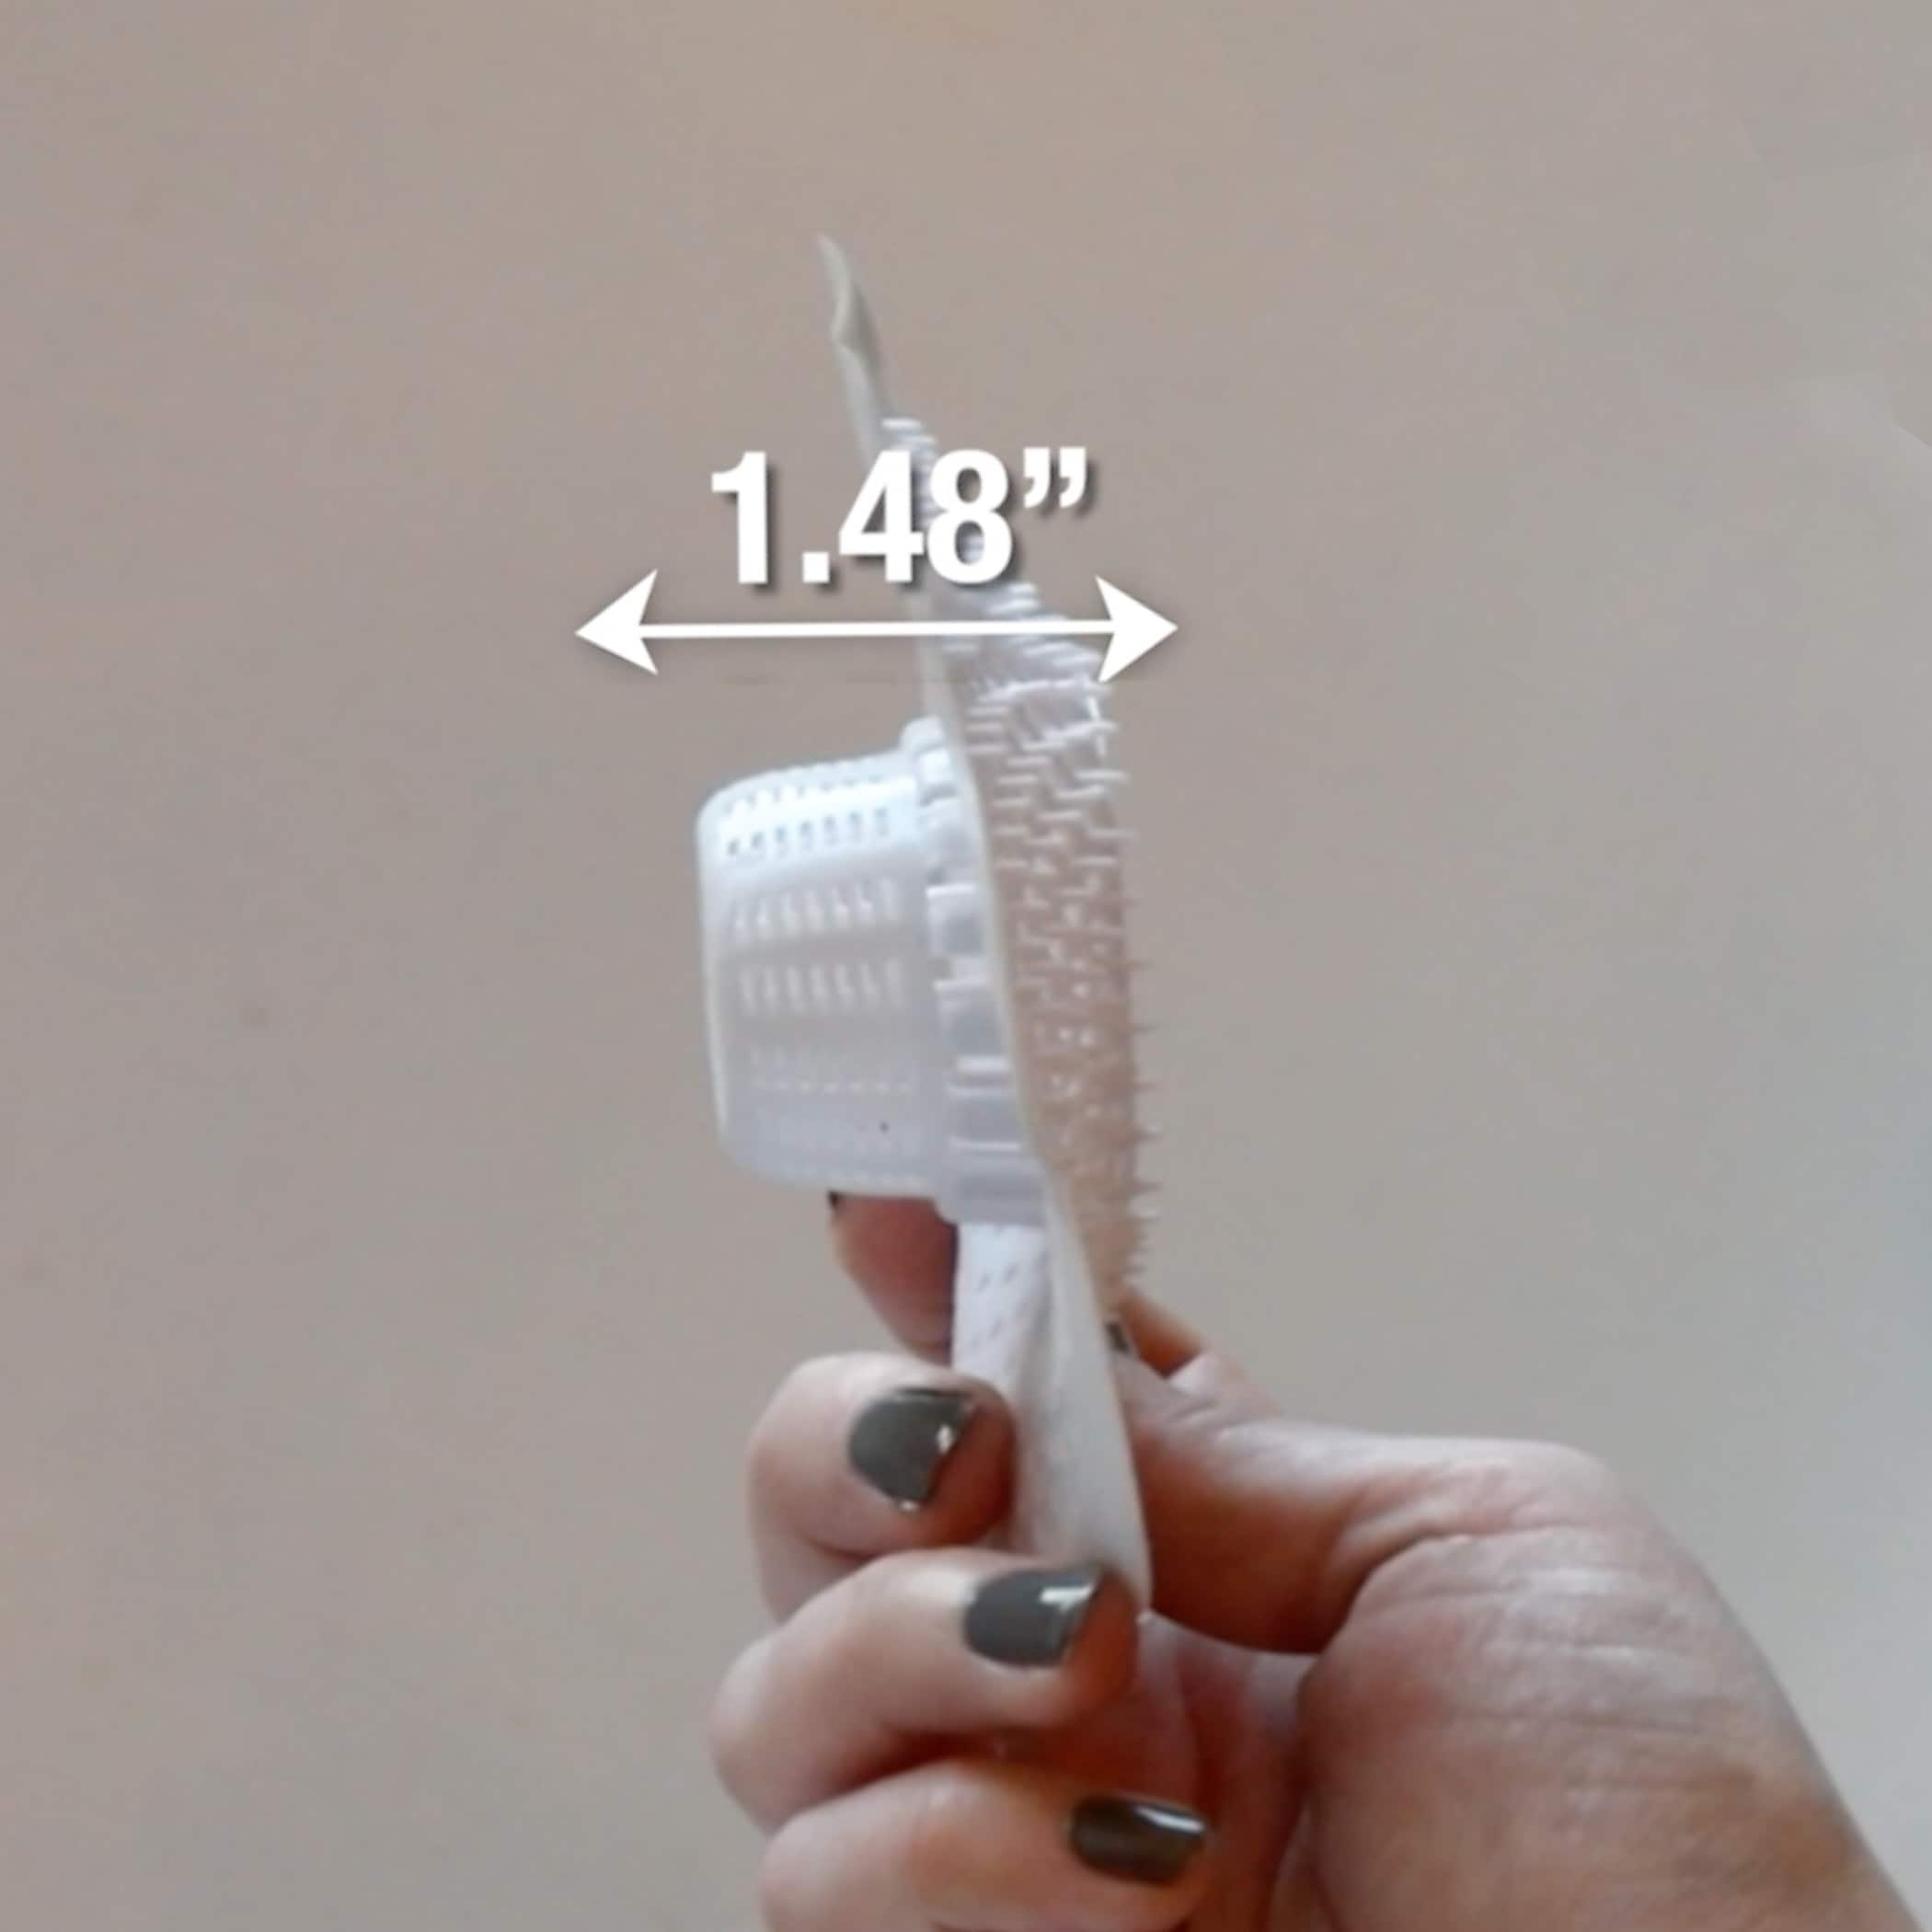 Hair Catcher Bathroom Tub Strainer in White - Danco